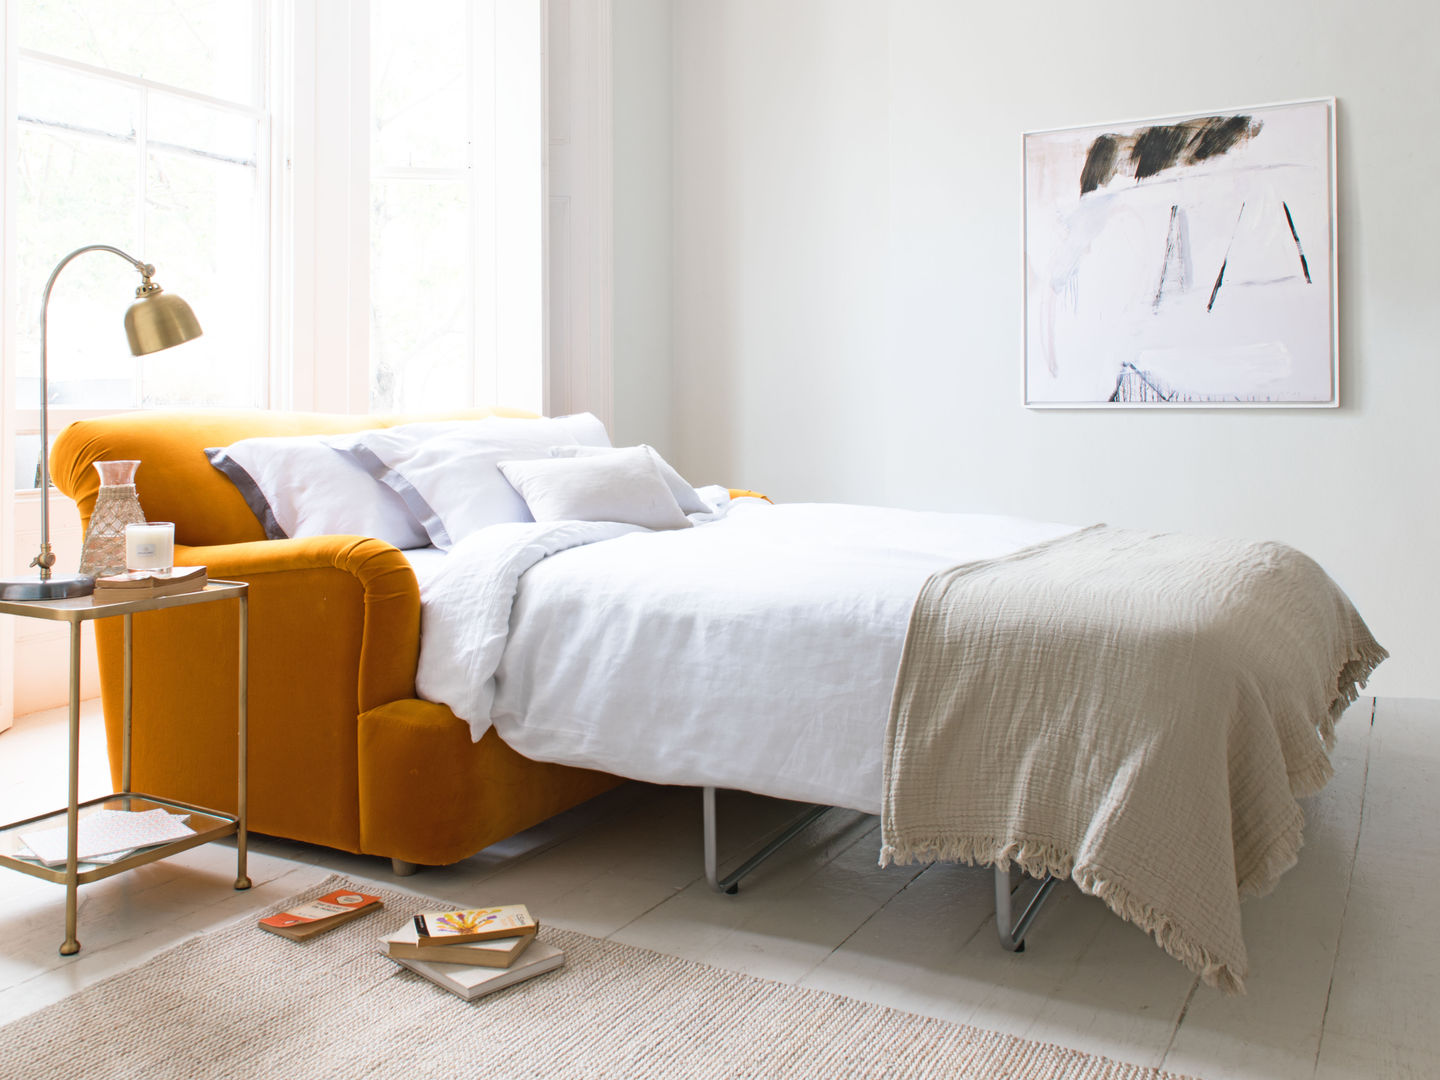 Pudding sofa bed Loaf Modern Oturma Odası sofa bed,sofa,bed,new,orange,guest-bed